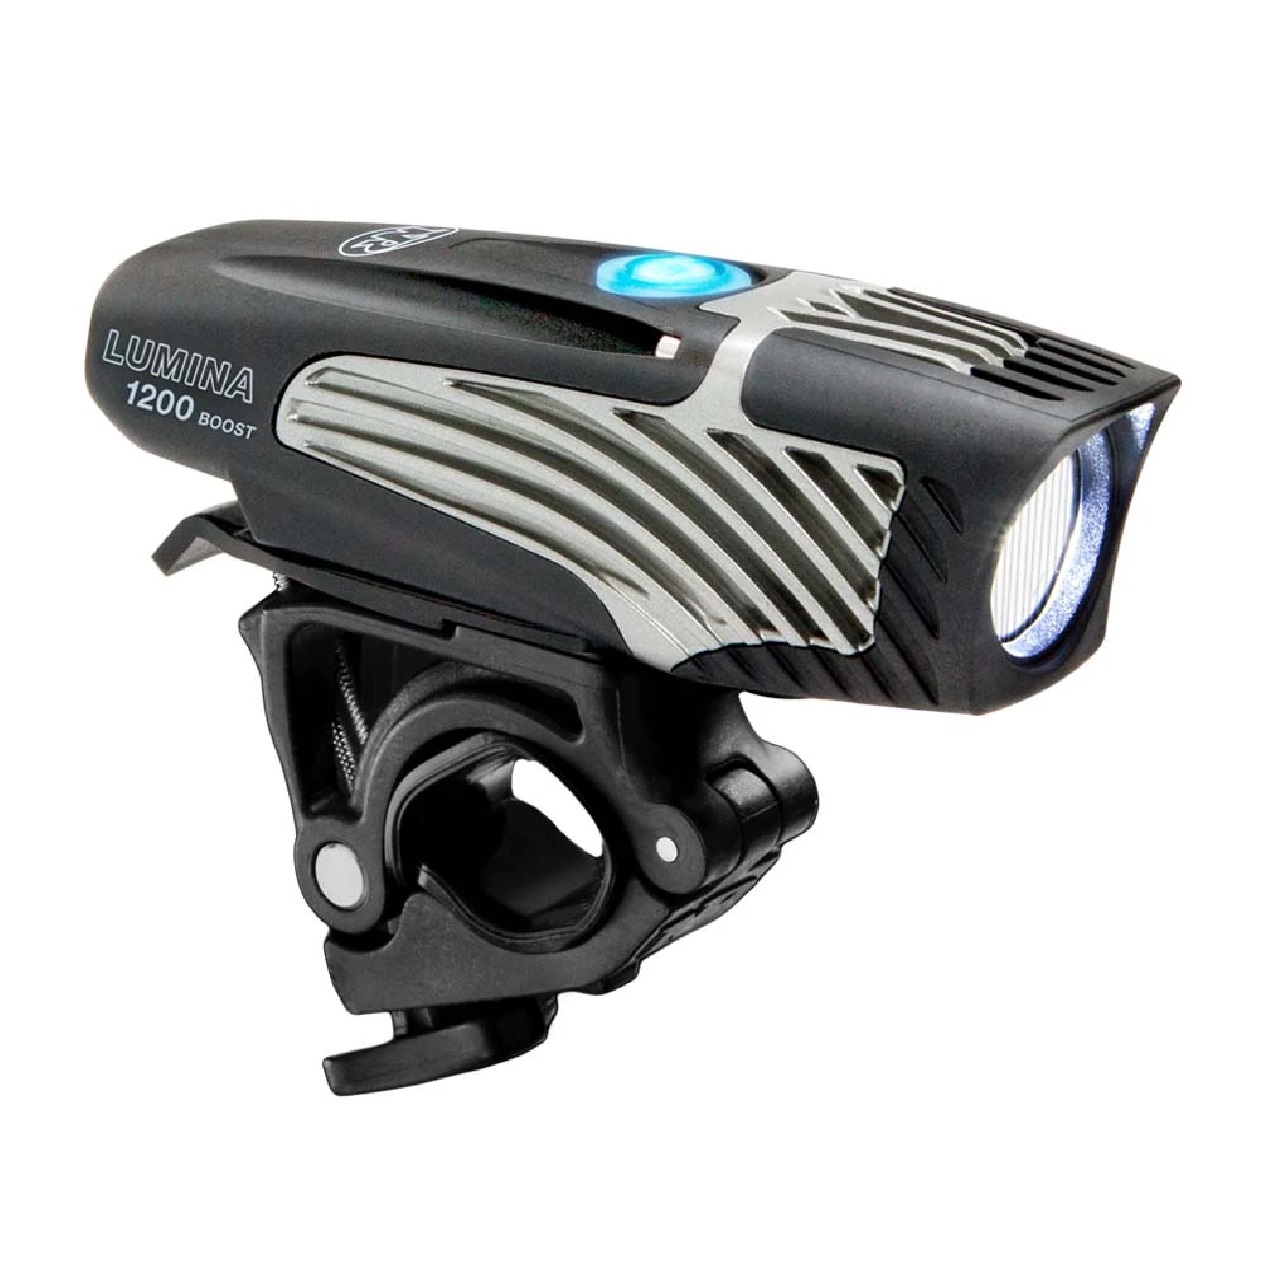 Niterider Lumina 1200 boost Road/MTB/Commute Front Cycling Light (6781)